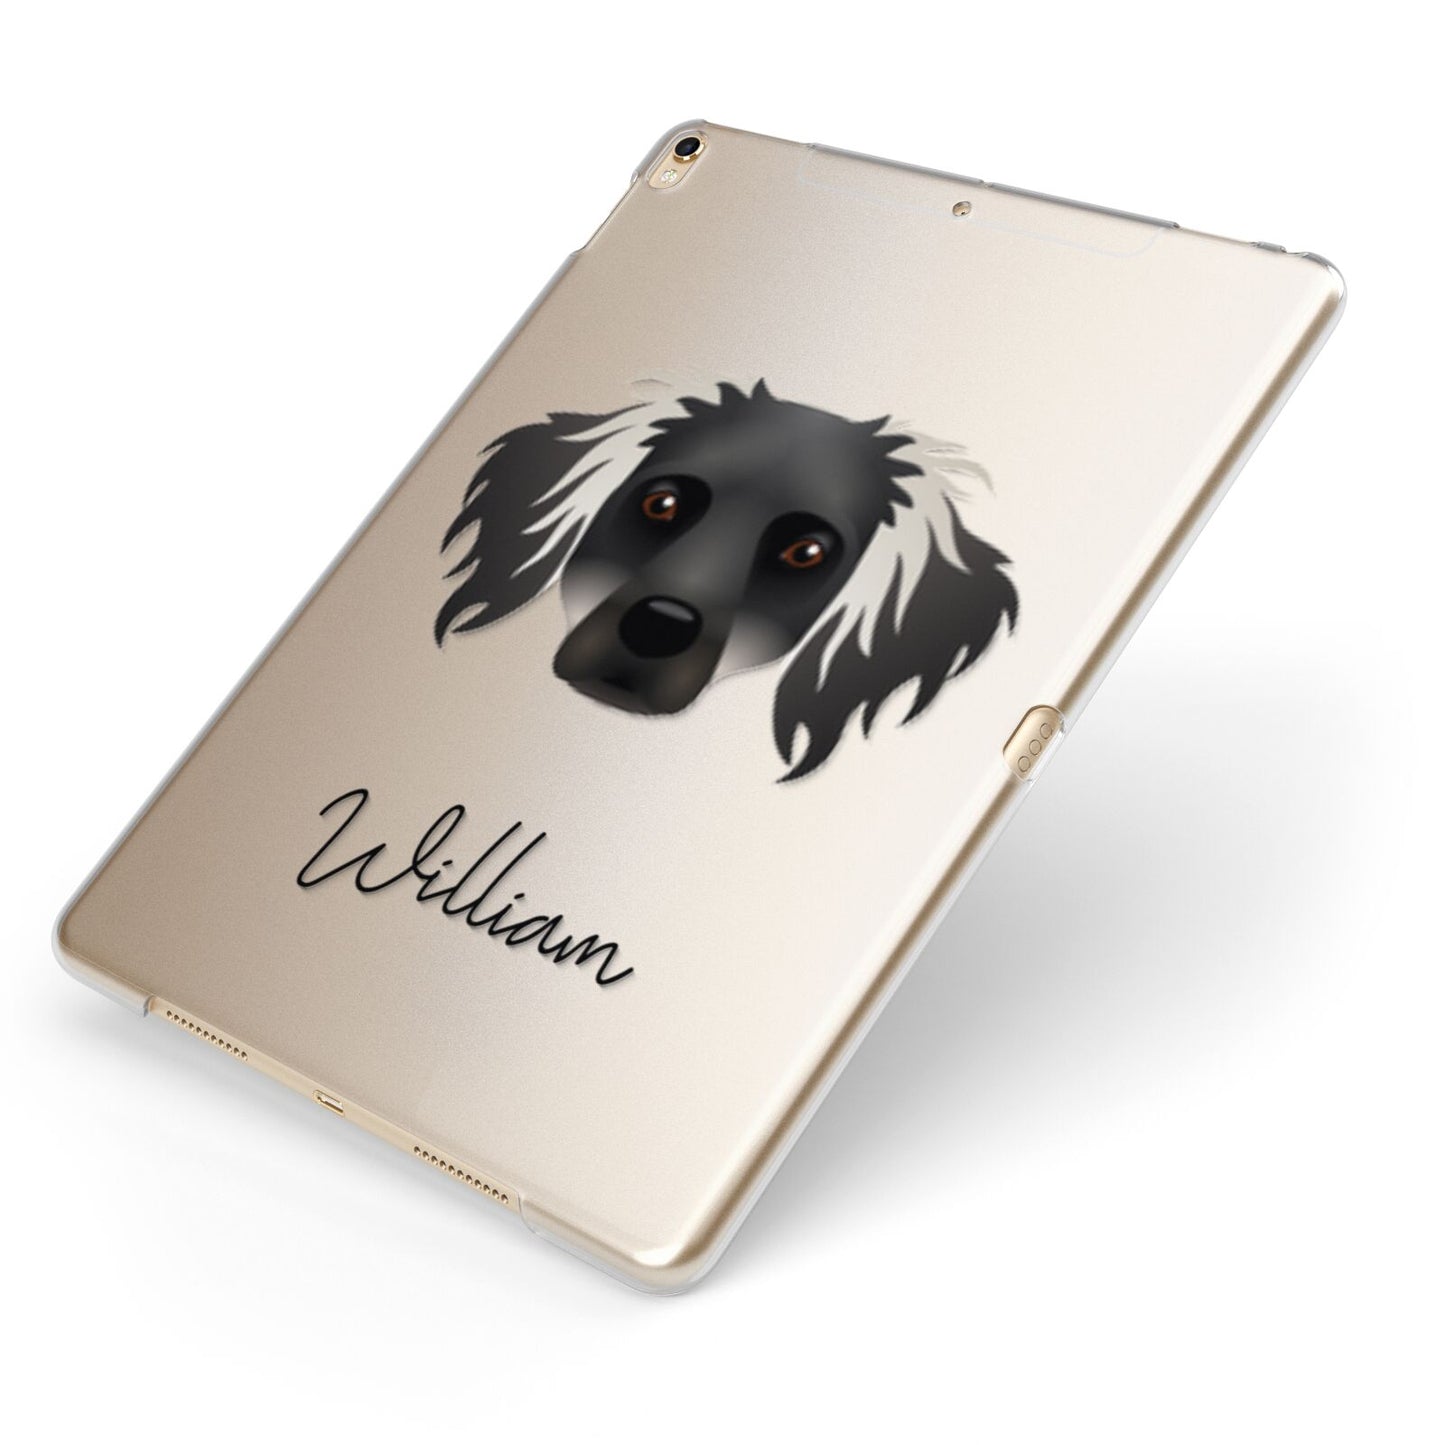 Dameranian Personalised Apple iPad Case on Gold iPad Side View